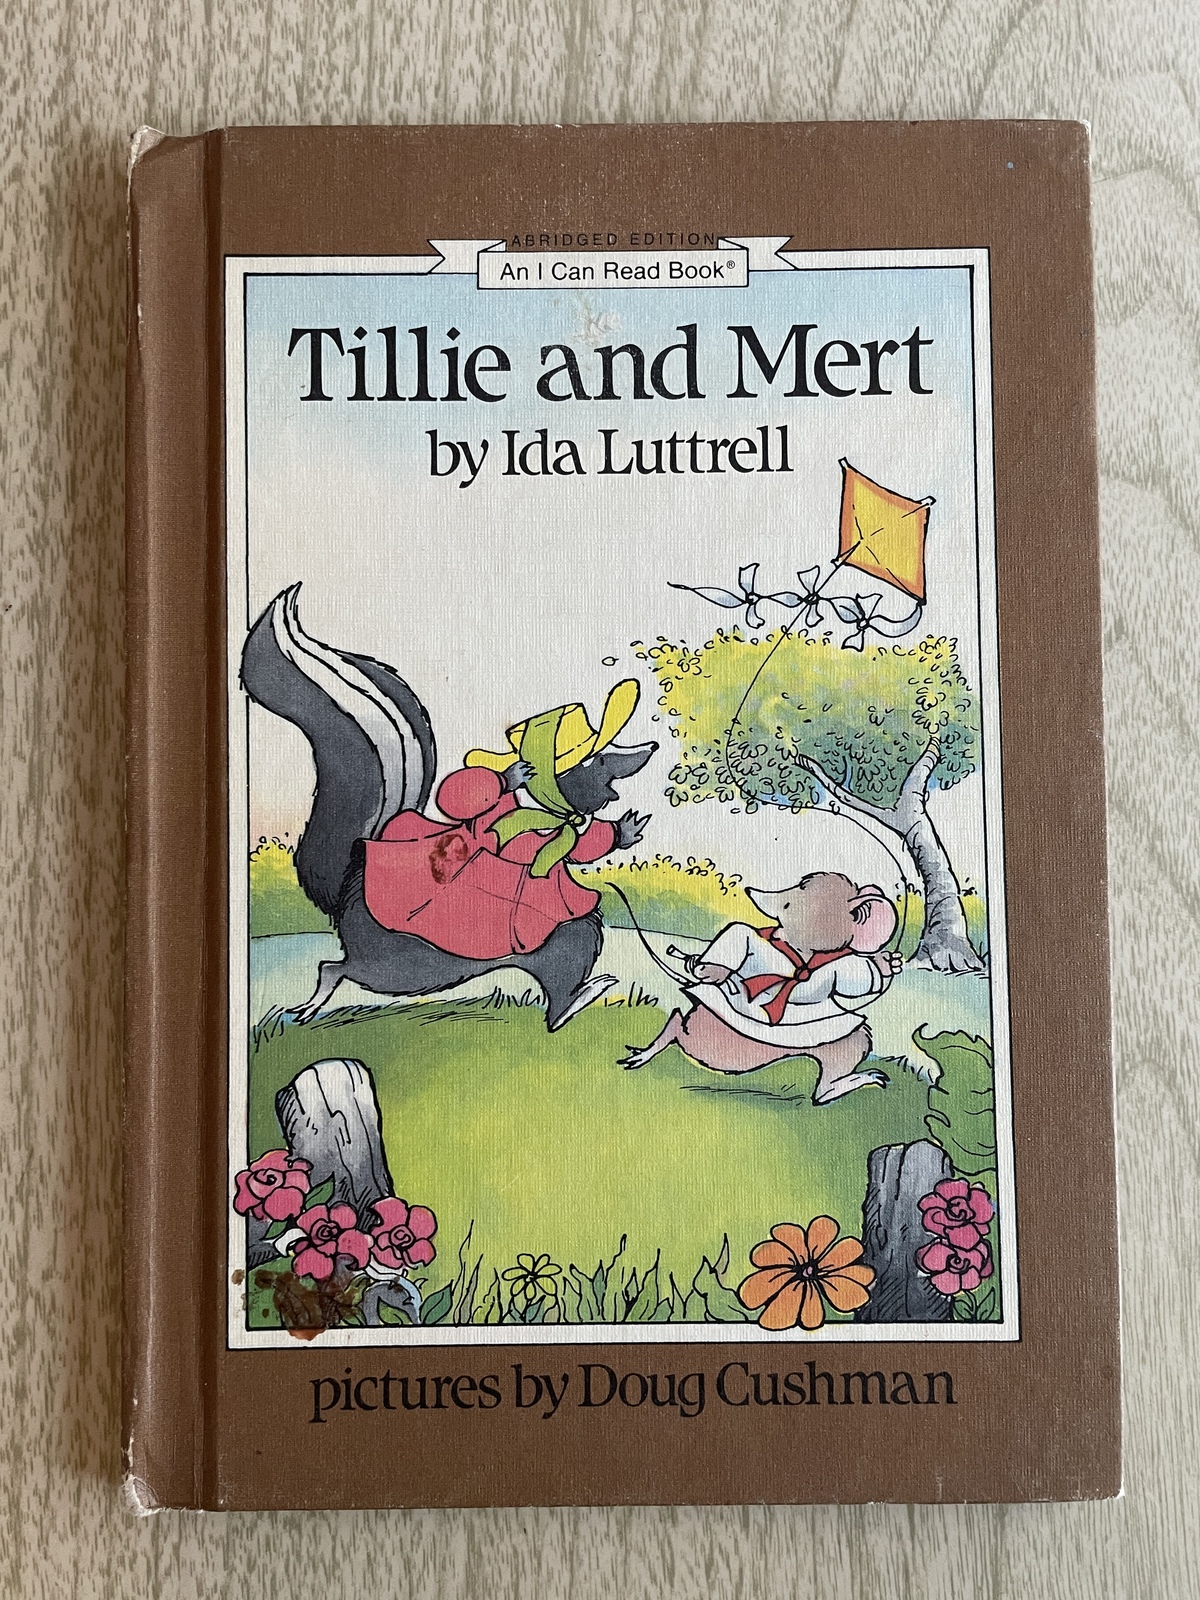 Primary image for Vintage Weekly Reader Book: Tillie and Mert